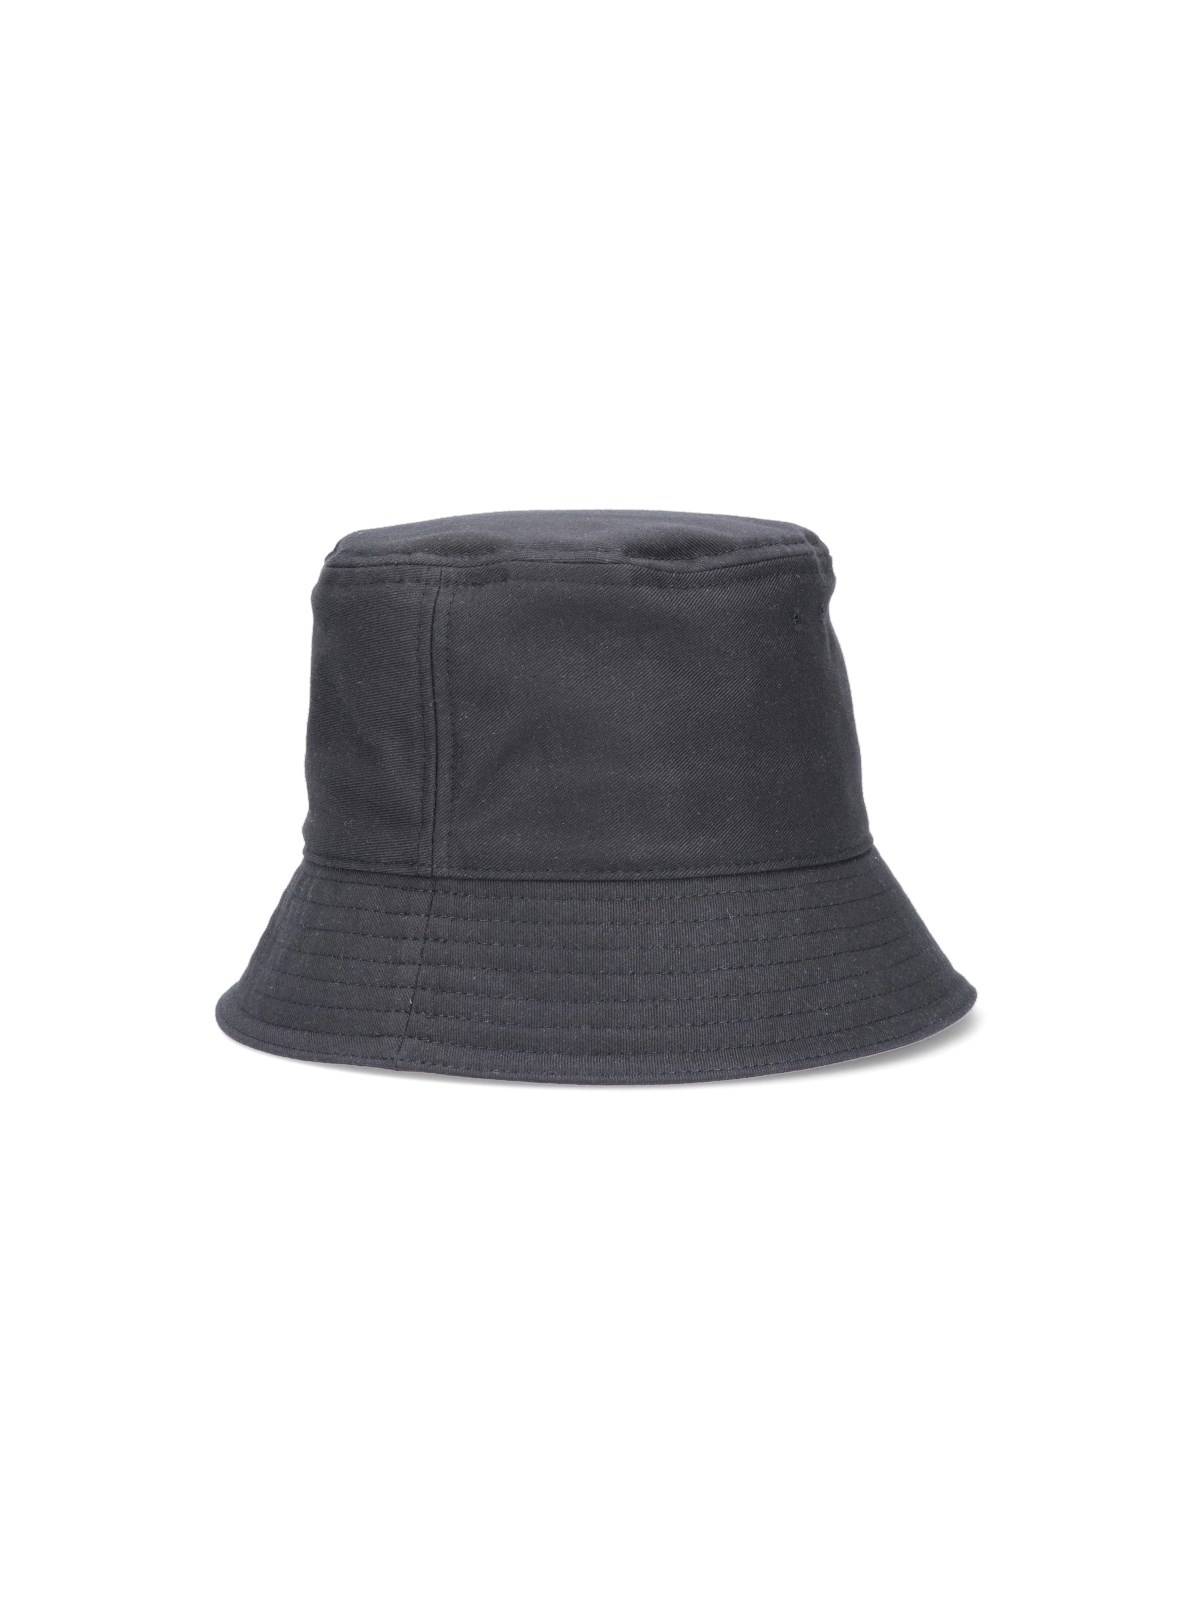 'VLTN' BUCKET HAT - 2